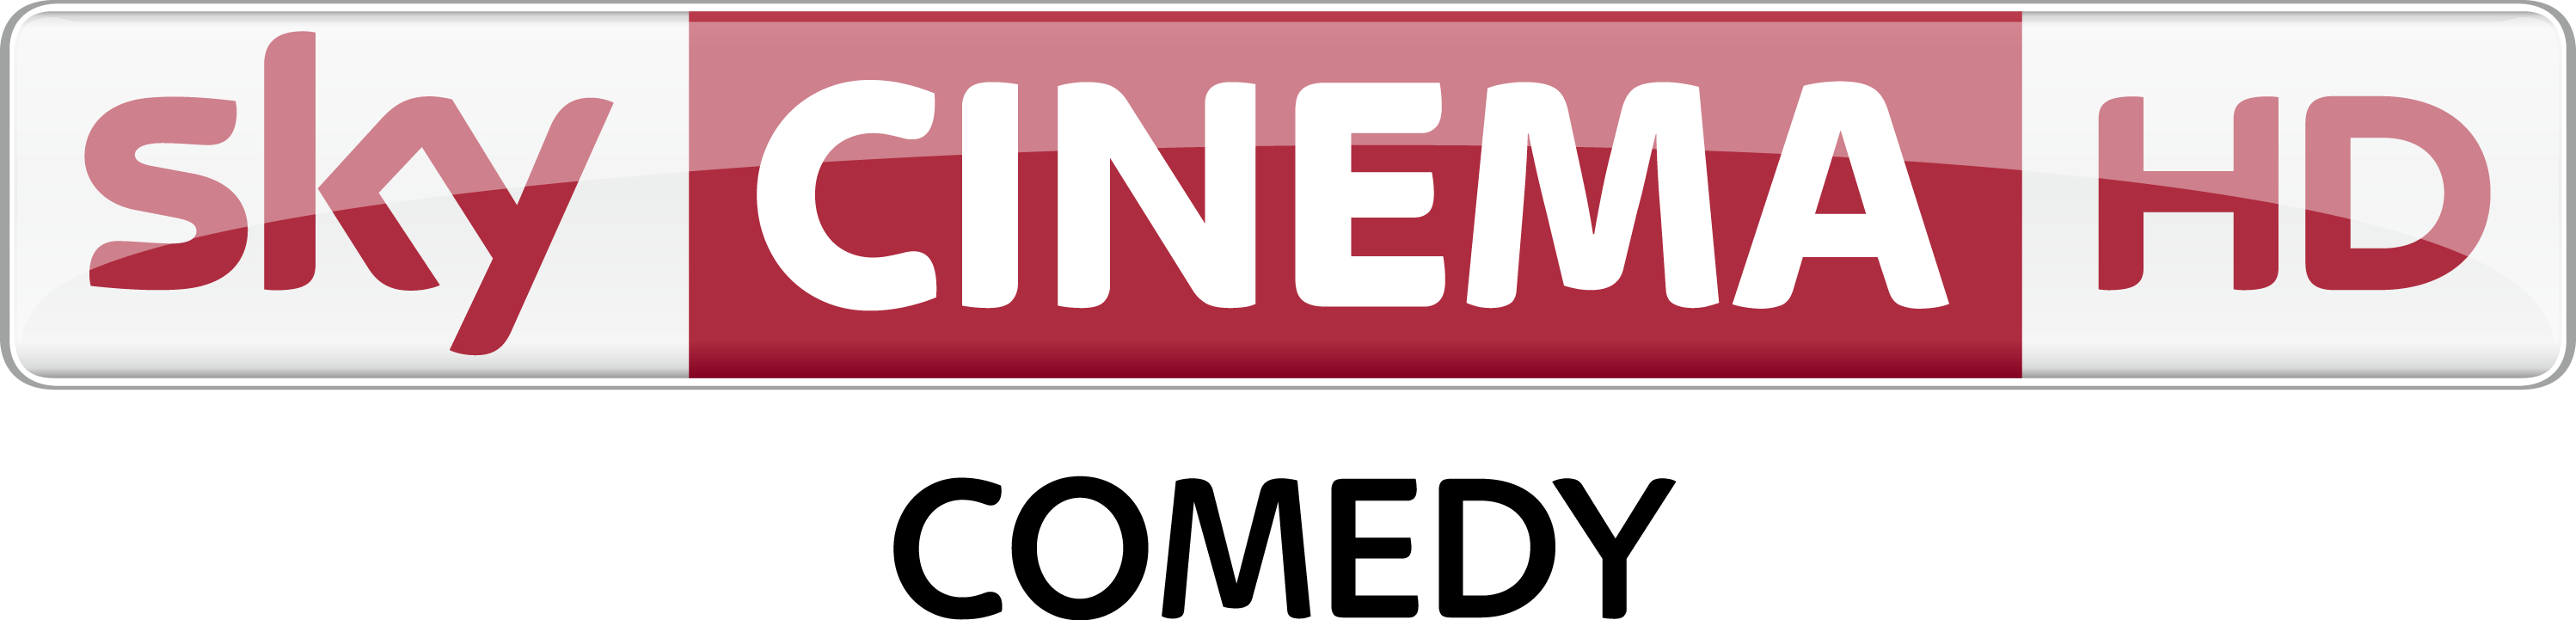 File:sky Cinema Comedy Hd De Logo 2016.png - Comedy, Transparent background PNG HD thumbnail